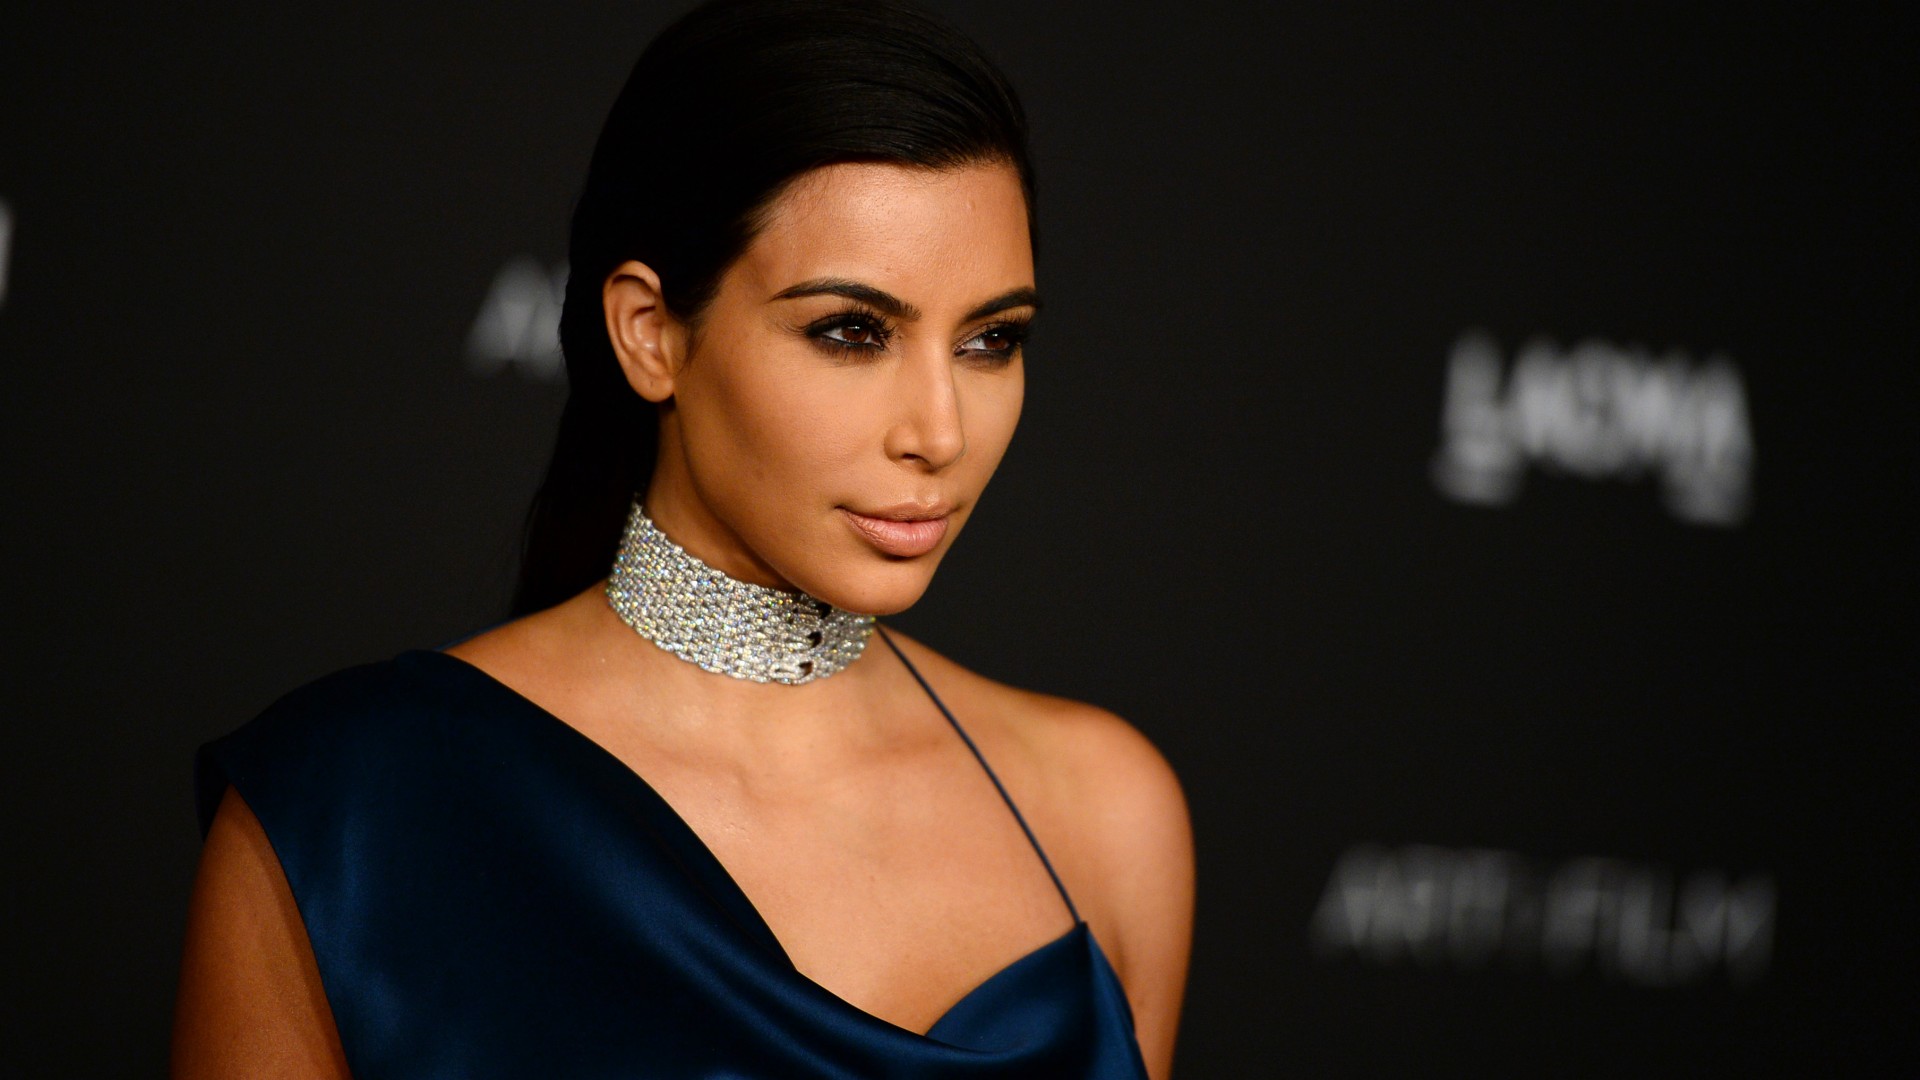 Kim Kardashian Paper, Most Popular Celebs in 2015, Grammys 2015 Best Celebrity, television personality, model, actress (horizontal)